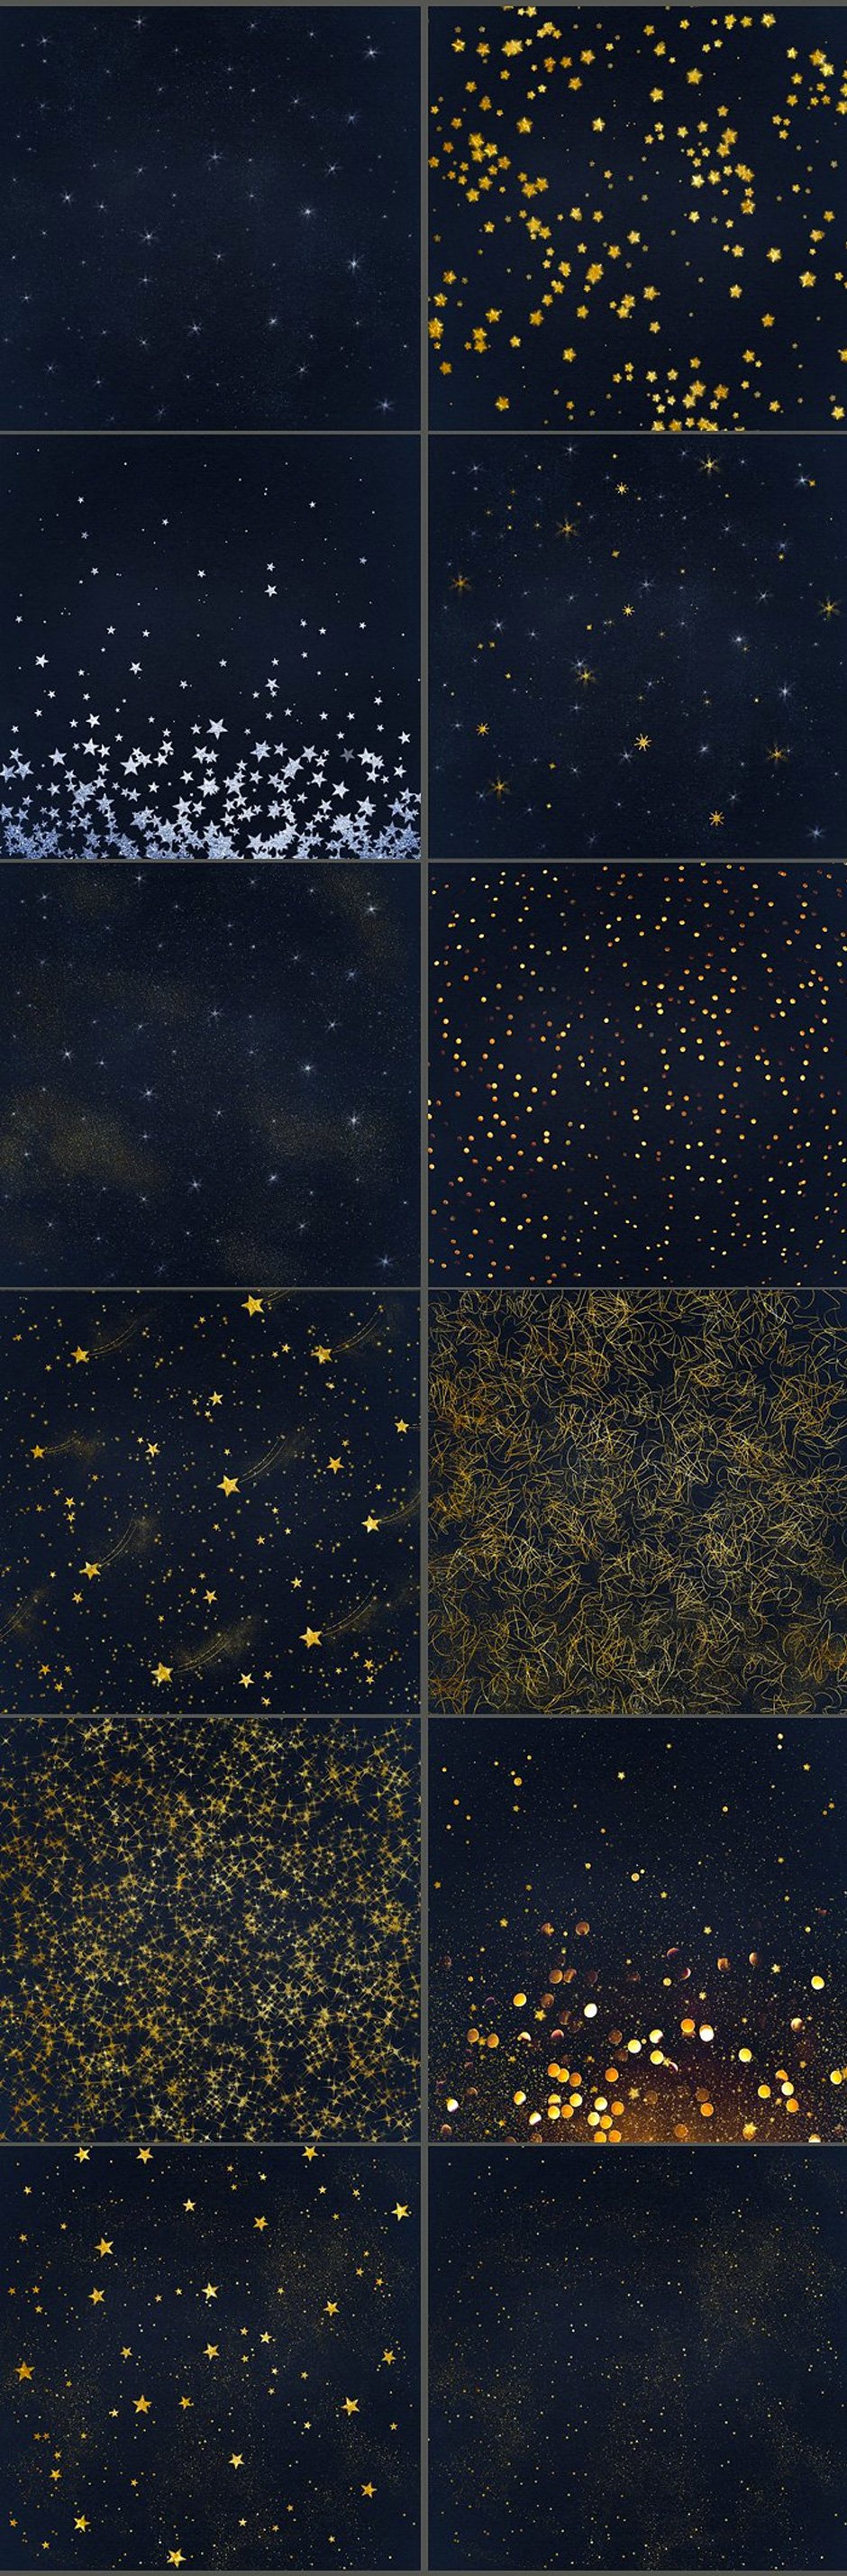 Starry Night Digital Paper